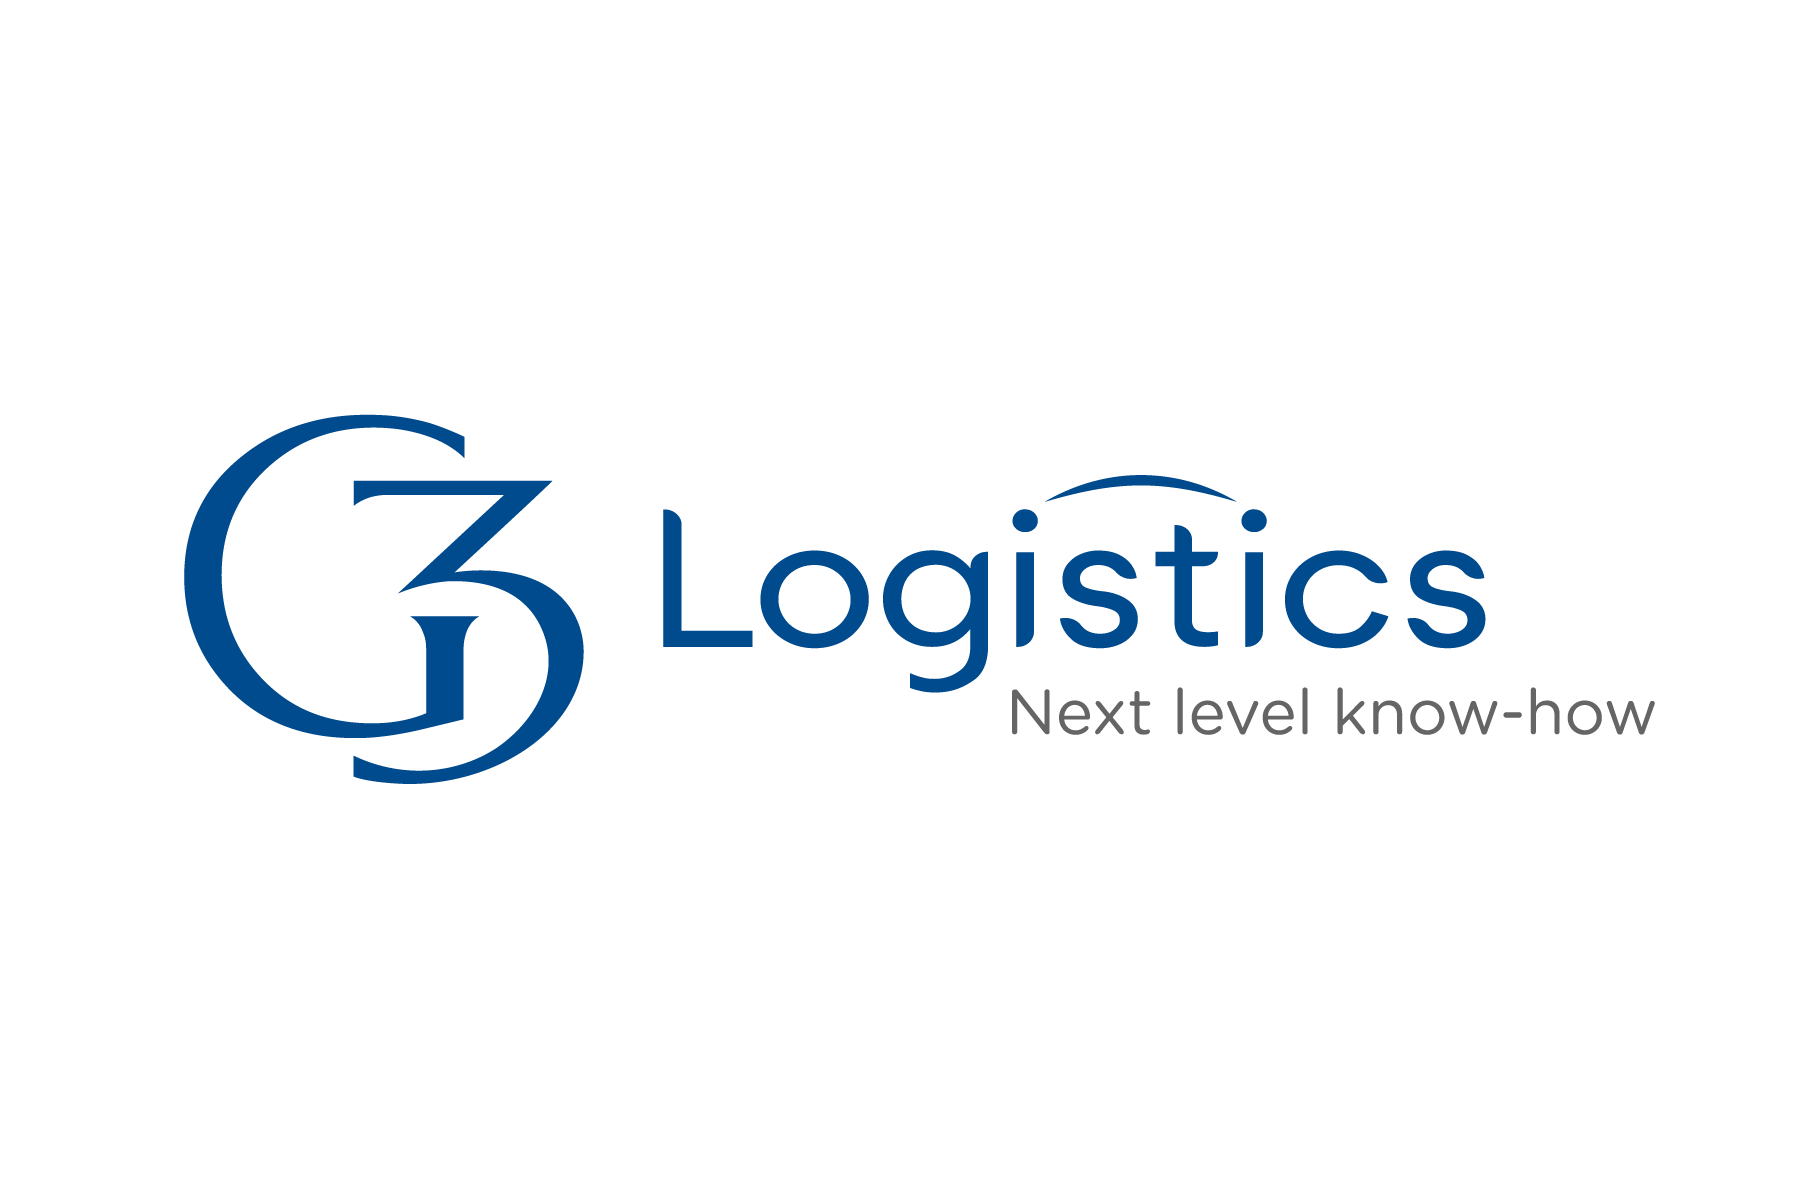 G3_Logistics_logo_g3enterprises